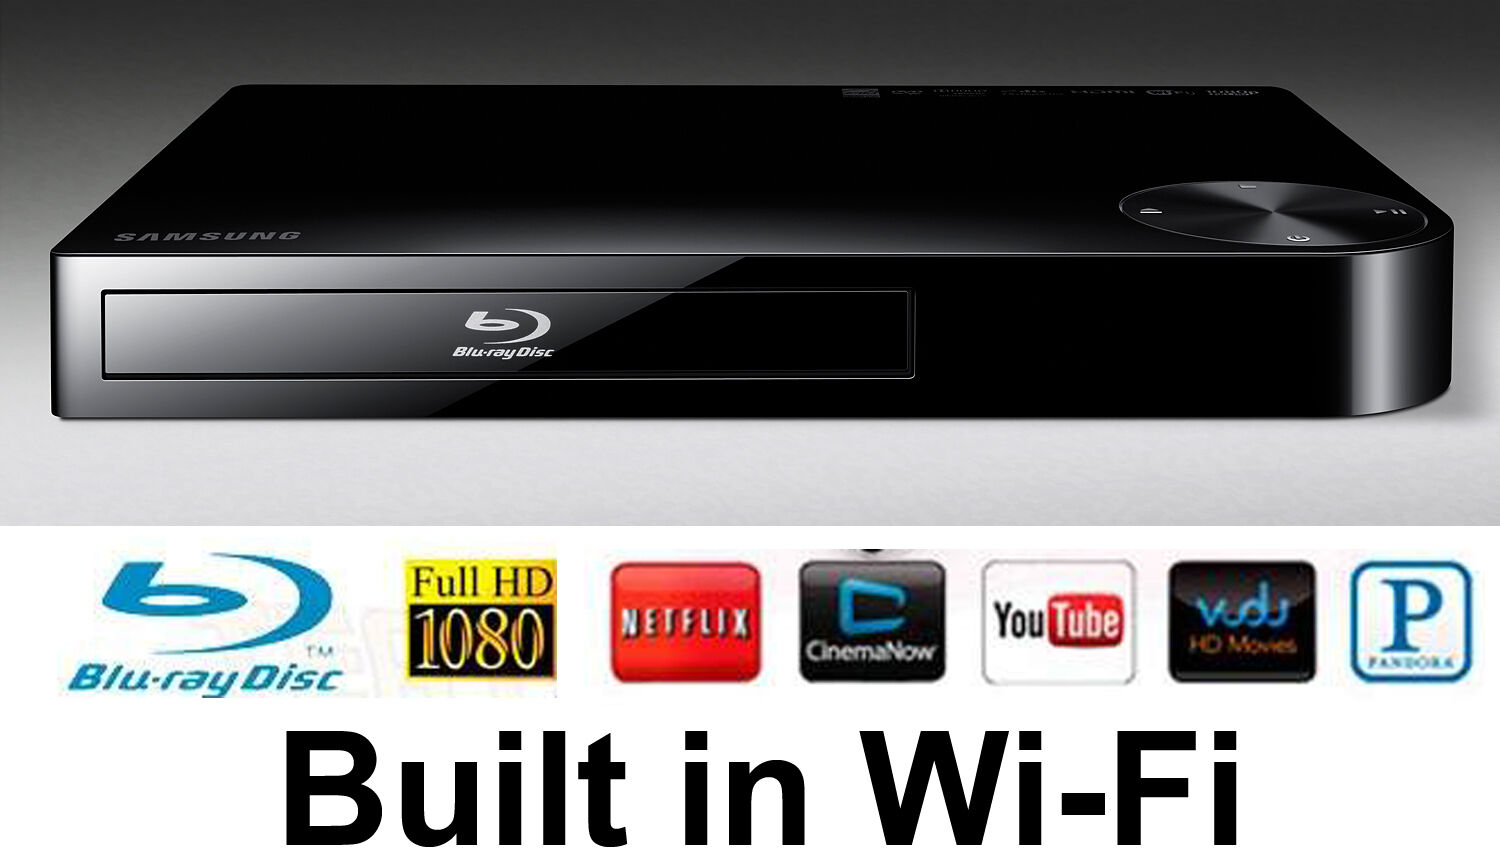 Samsung BD-E5400 Blu-ray Player | Netflix, Vudu, Youtube, CinemaNow, WiFi